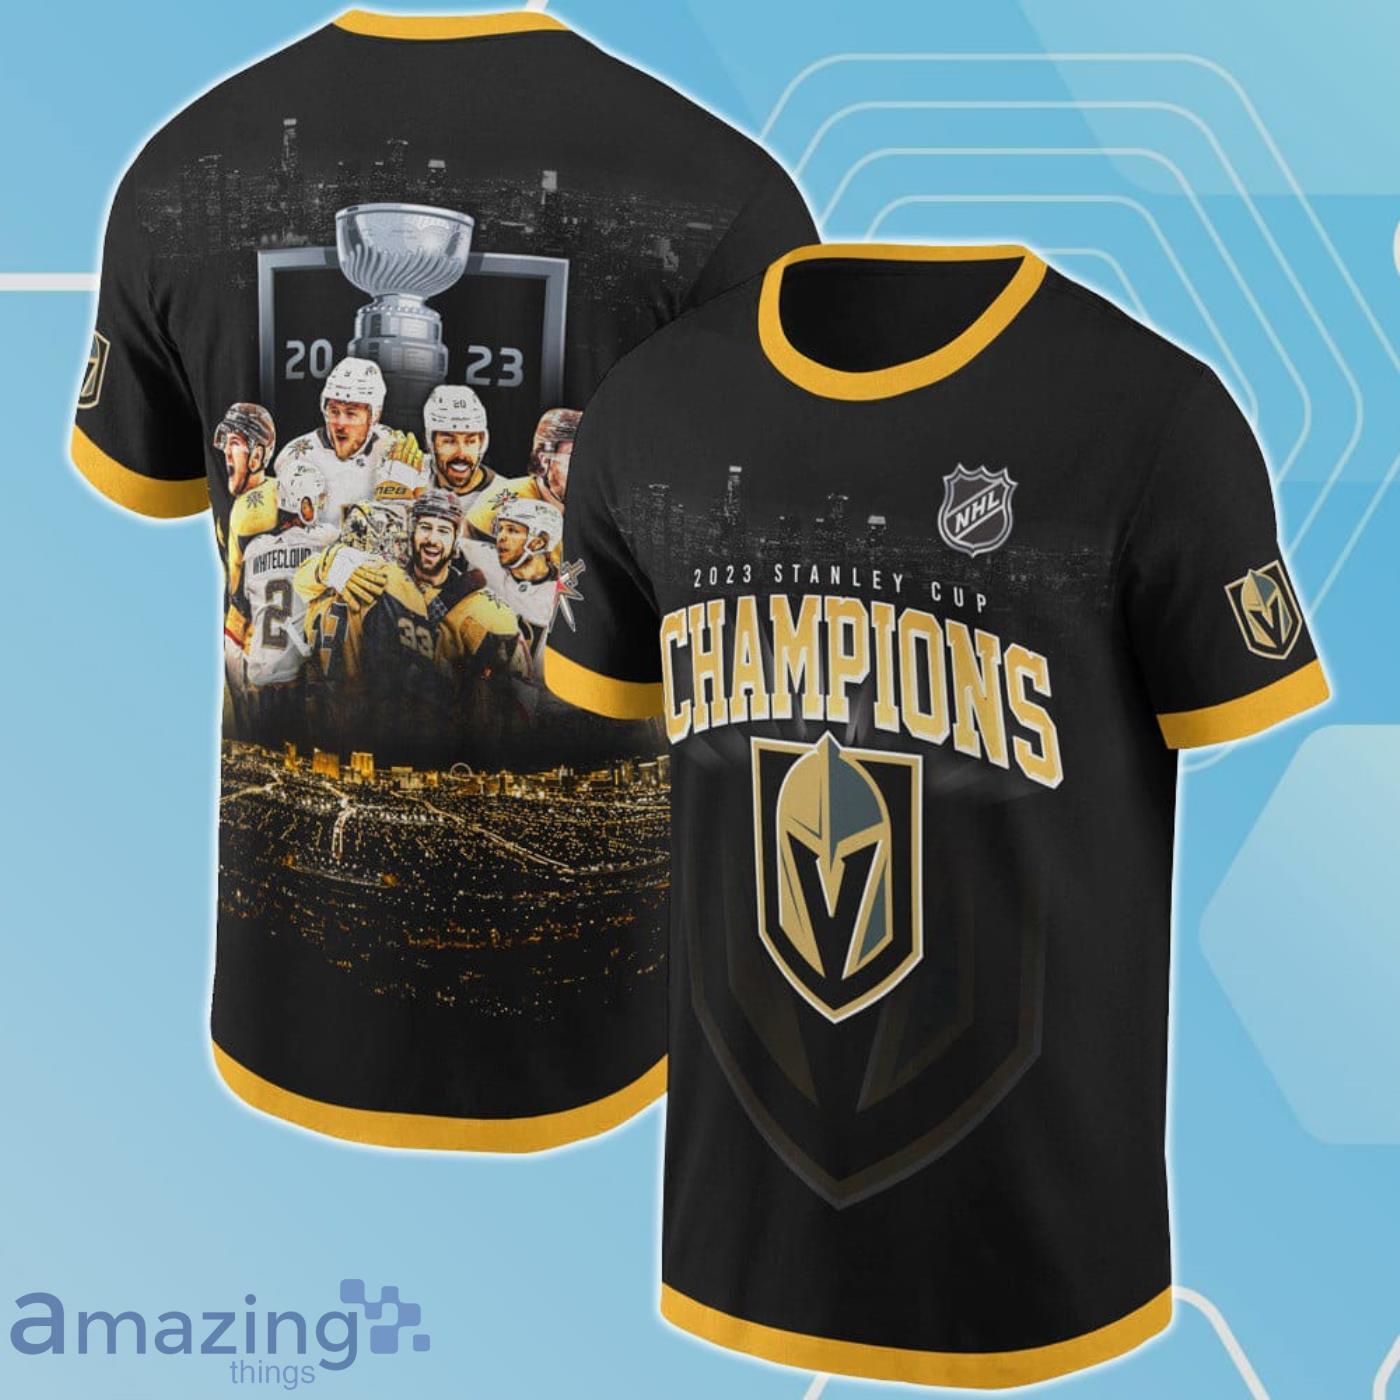 https://image.whatamazingthings.com/2023-06/vegas-golden-knights-national-hockey-league-champions-stanley-cup-2023-print-3d-shirt.jpg